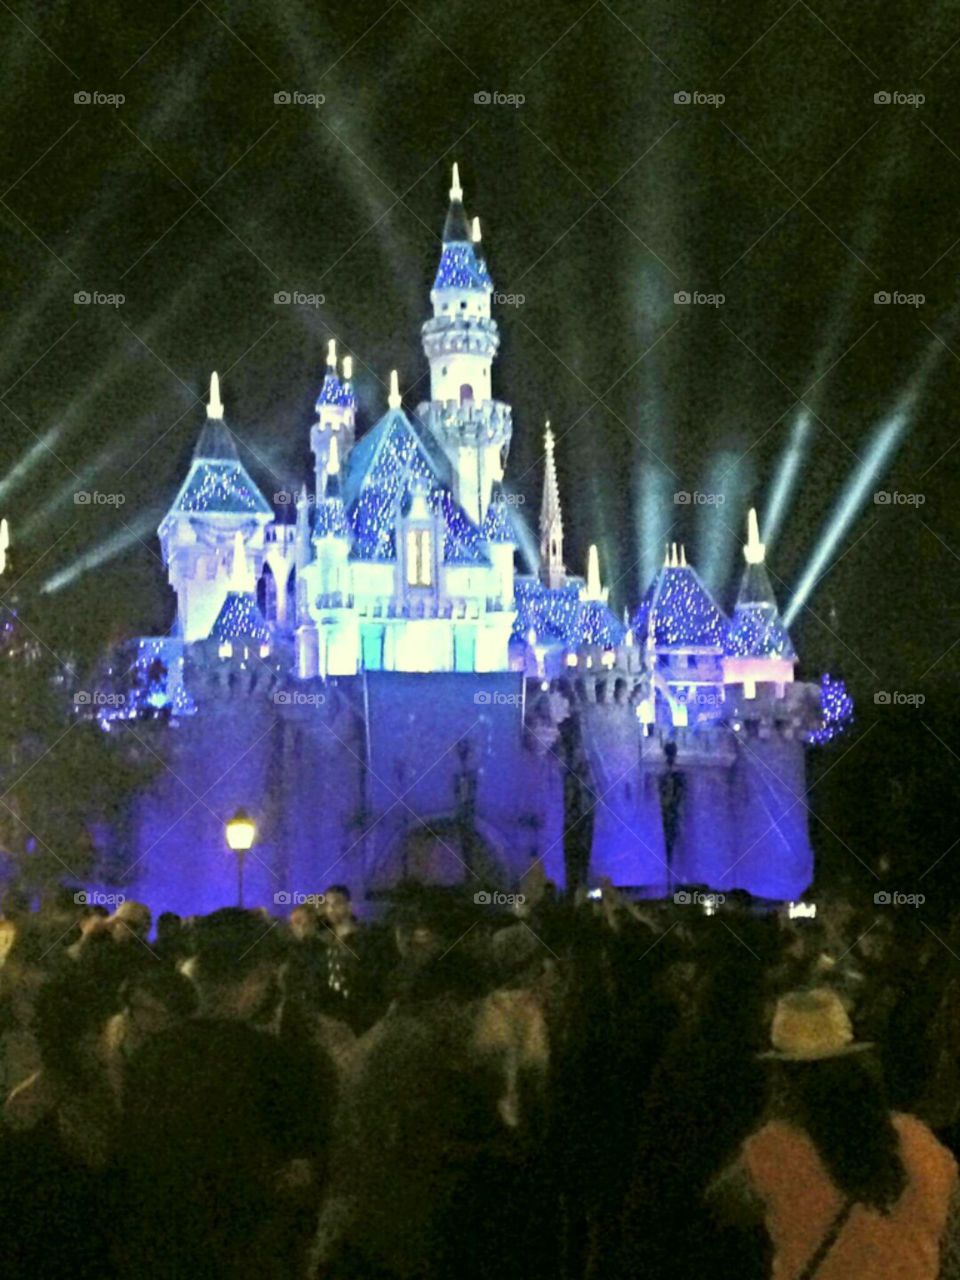 Laser light show at Disneyland's Sleeping Beauty Castle